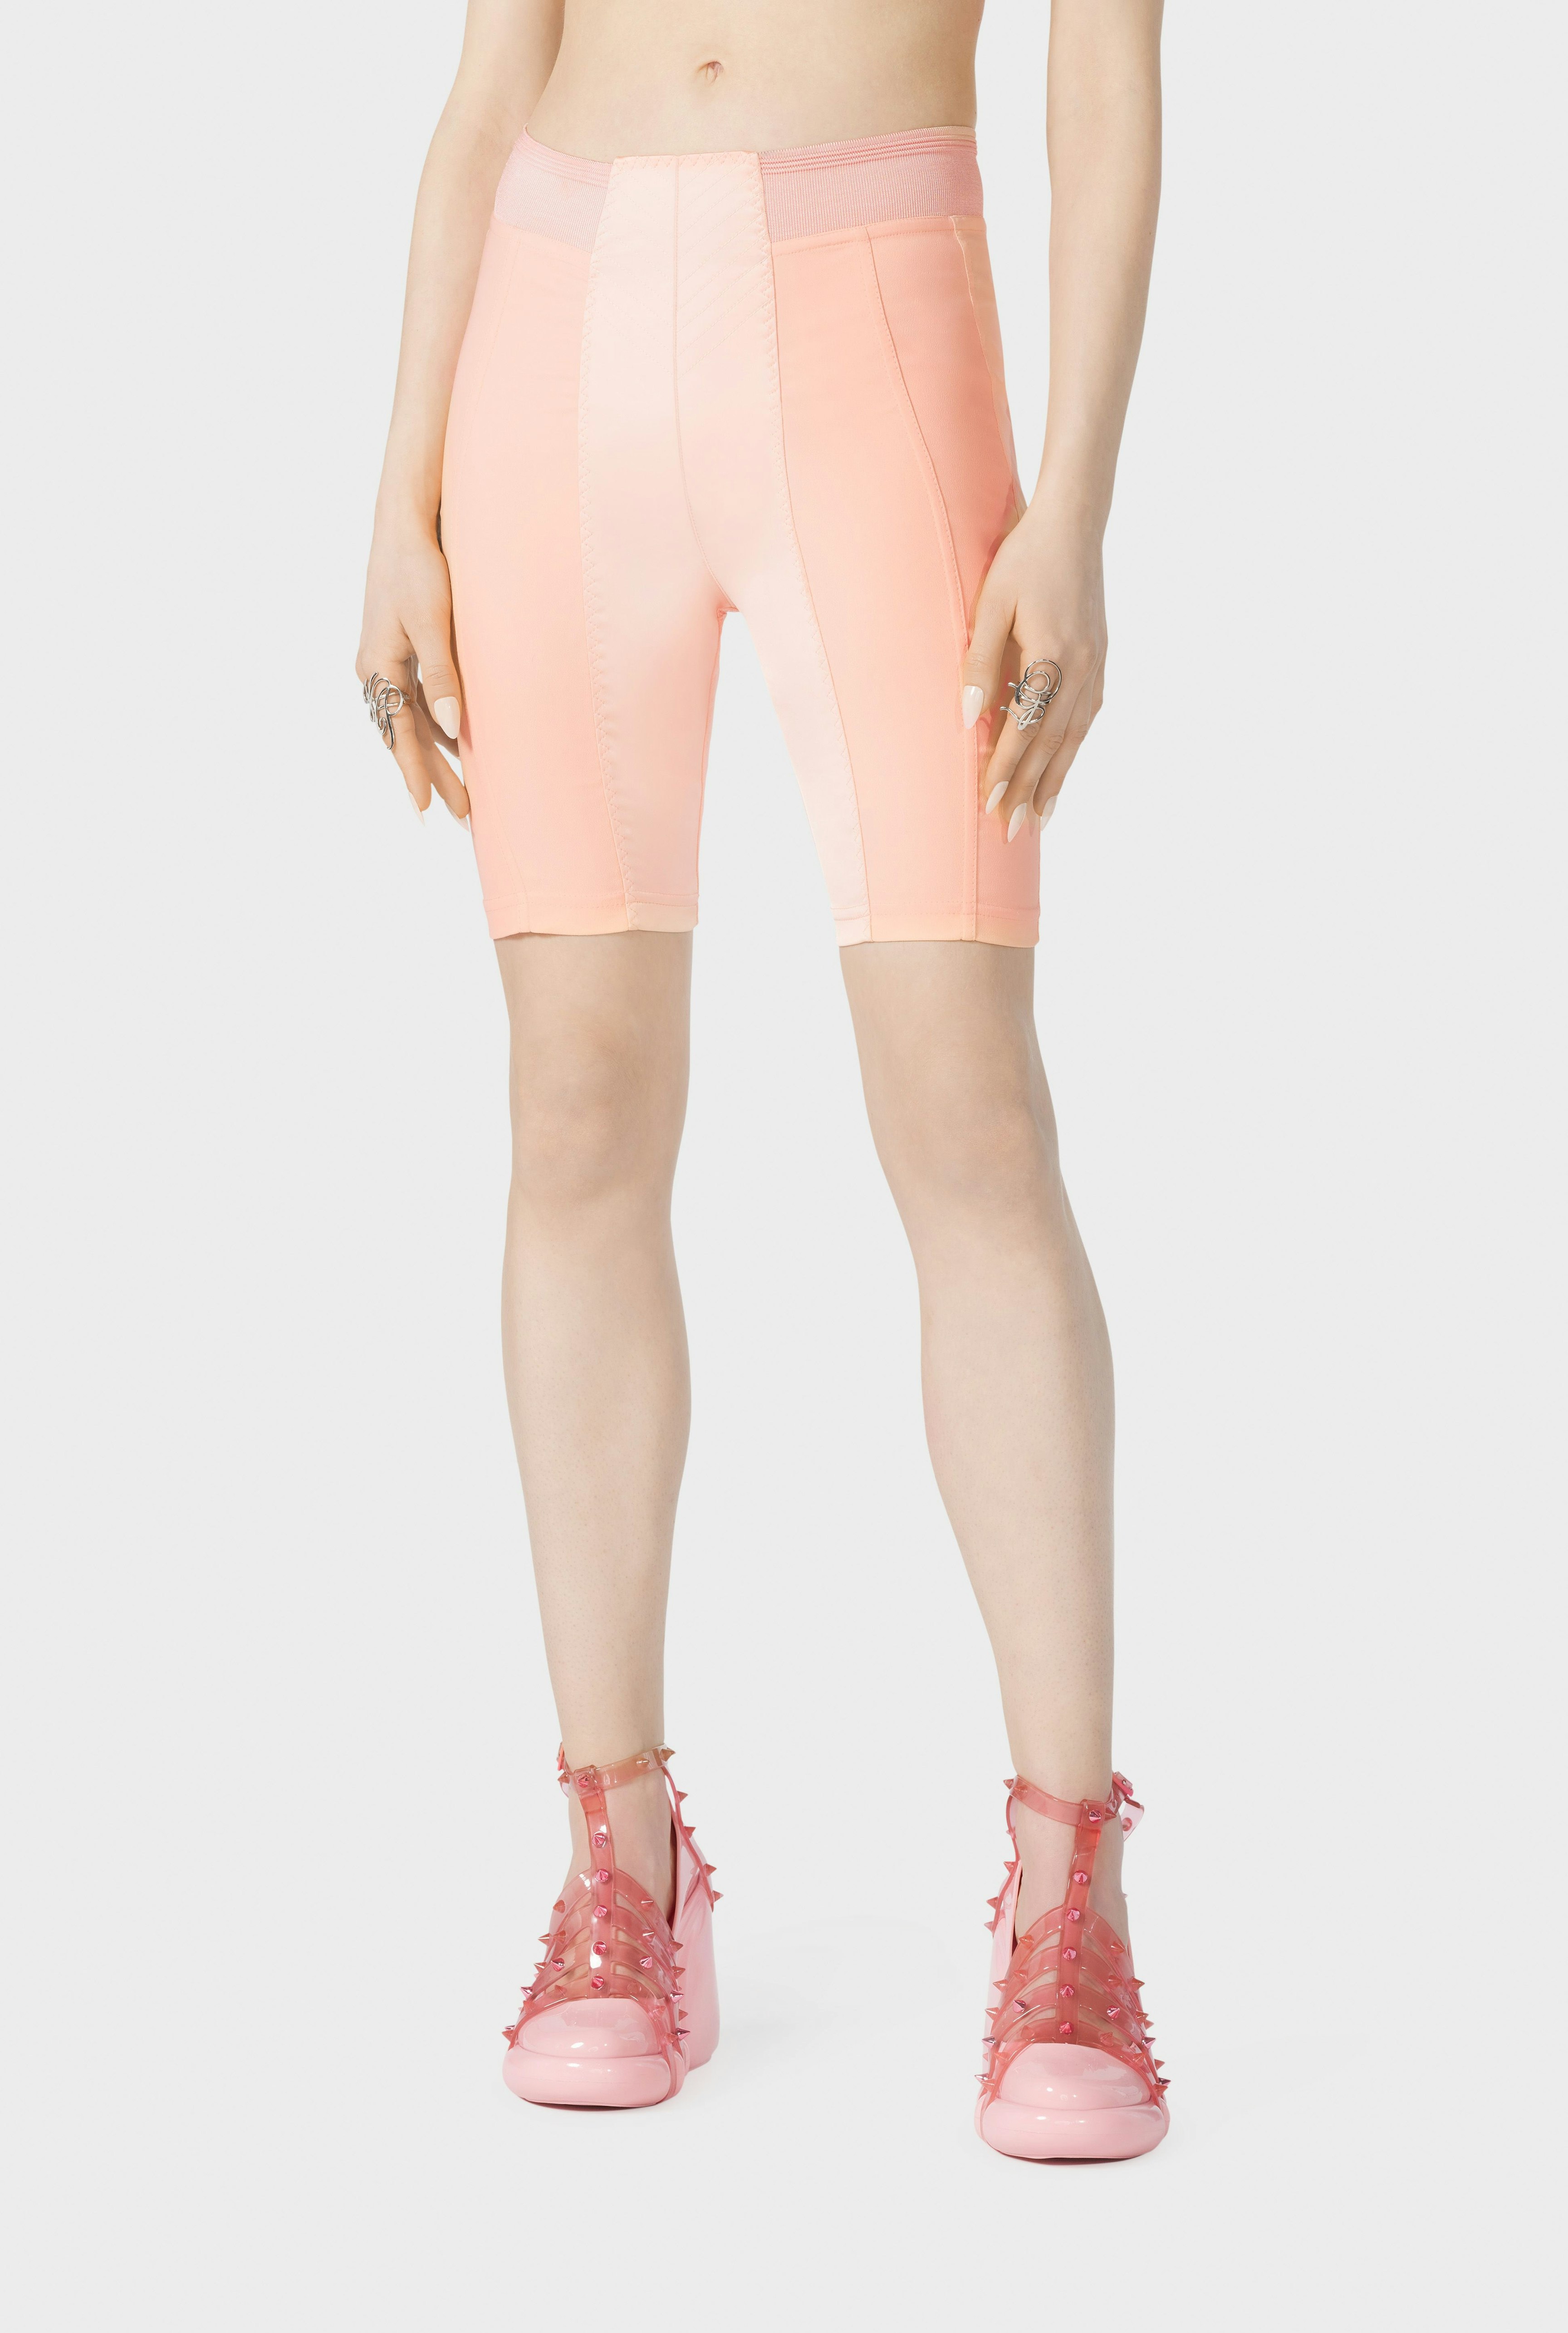 The Pink Iconic Bike Shorts